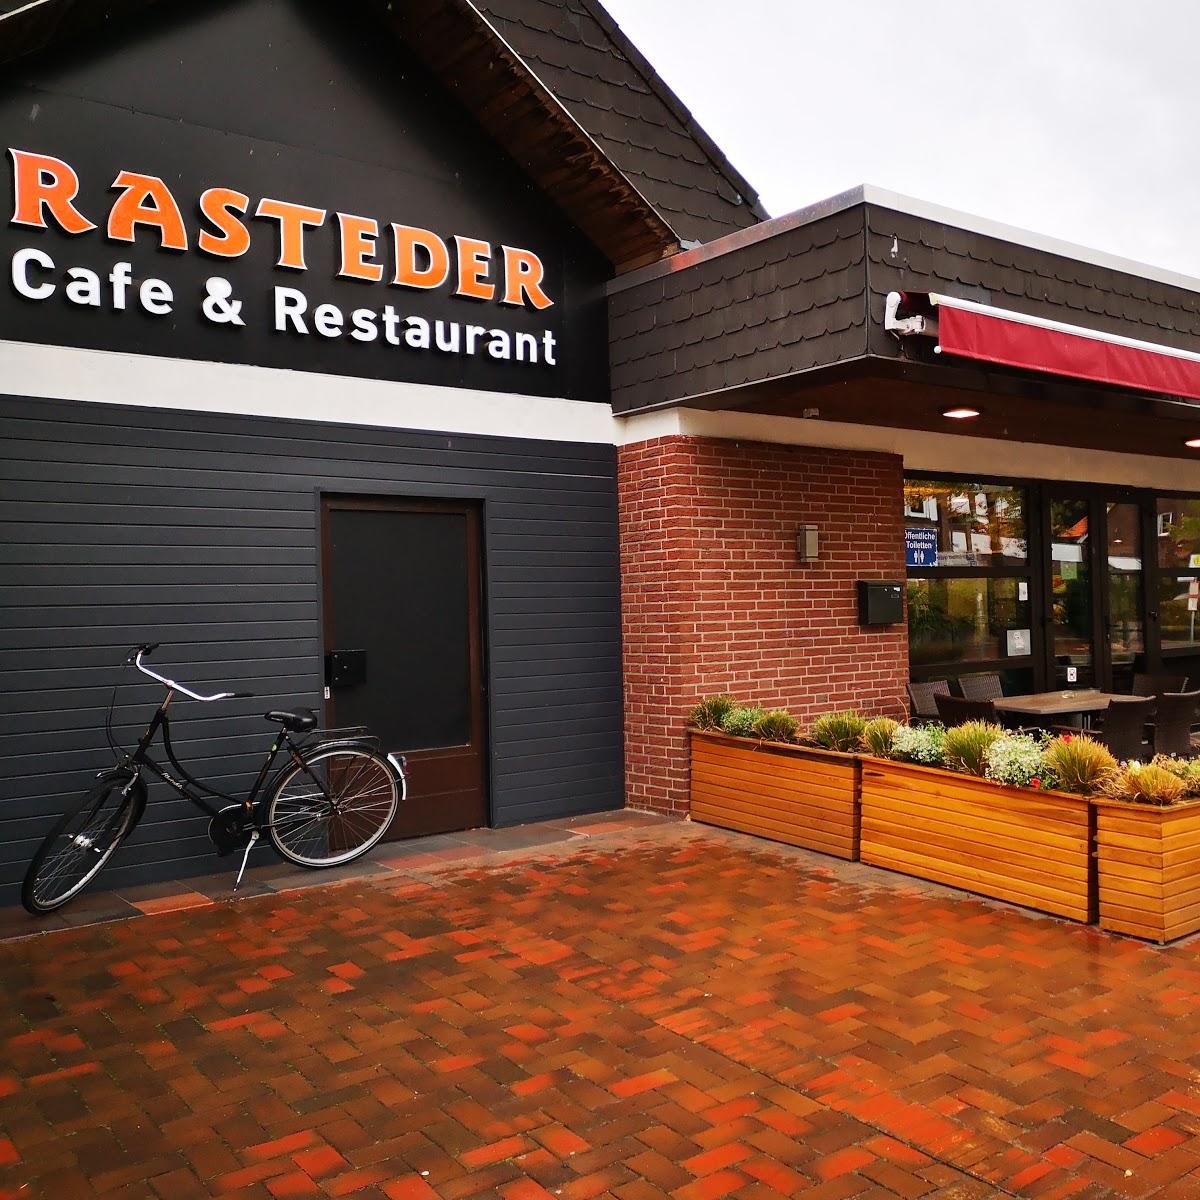 Restaurant "r Café & Restaurant am Bahnhof" in  Rastede